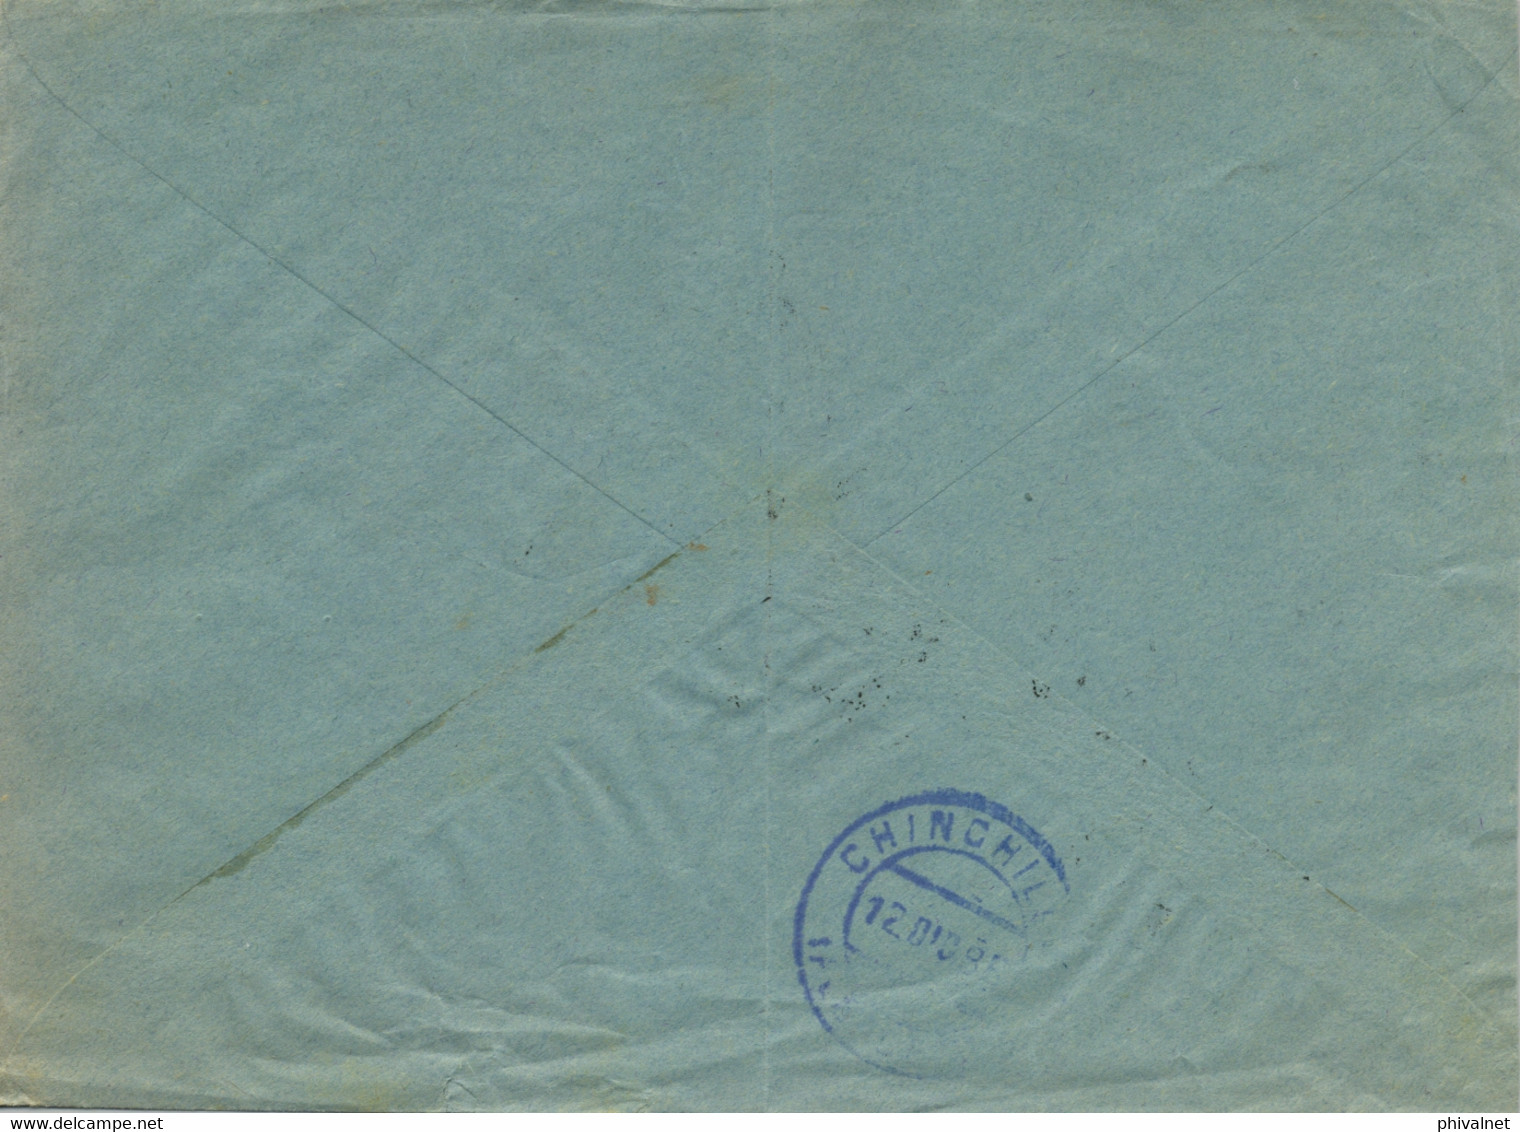 1935  ALBACETE , SOBRE CIRCULADO DE CORRAL RUBIO A CHINCHILLA , LLEGADA EN AZUL AL DORSO - Covers & Documents